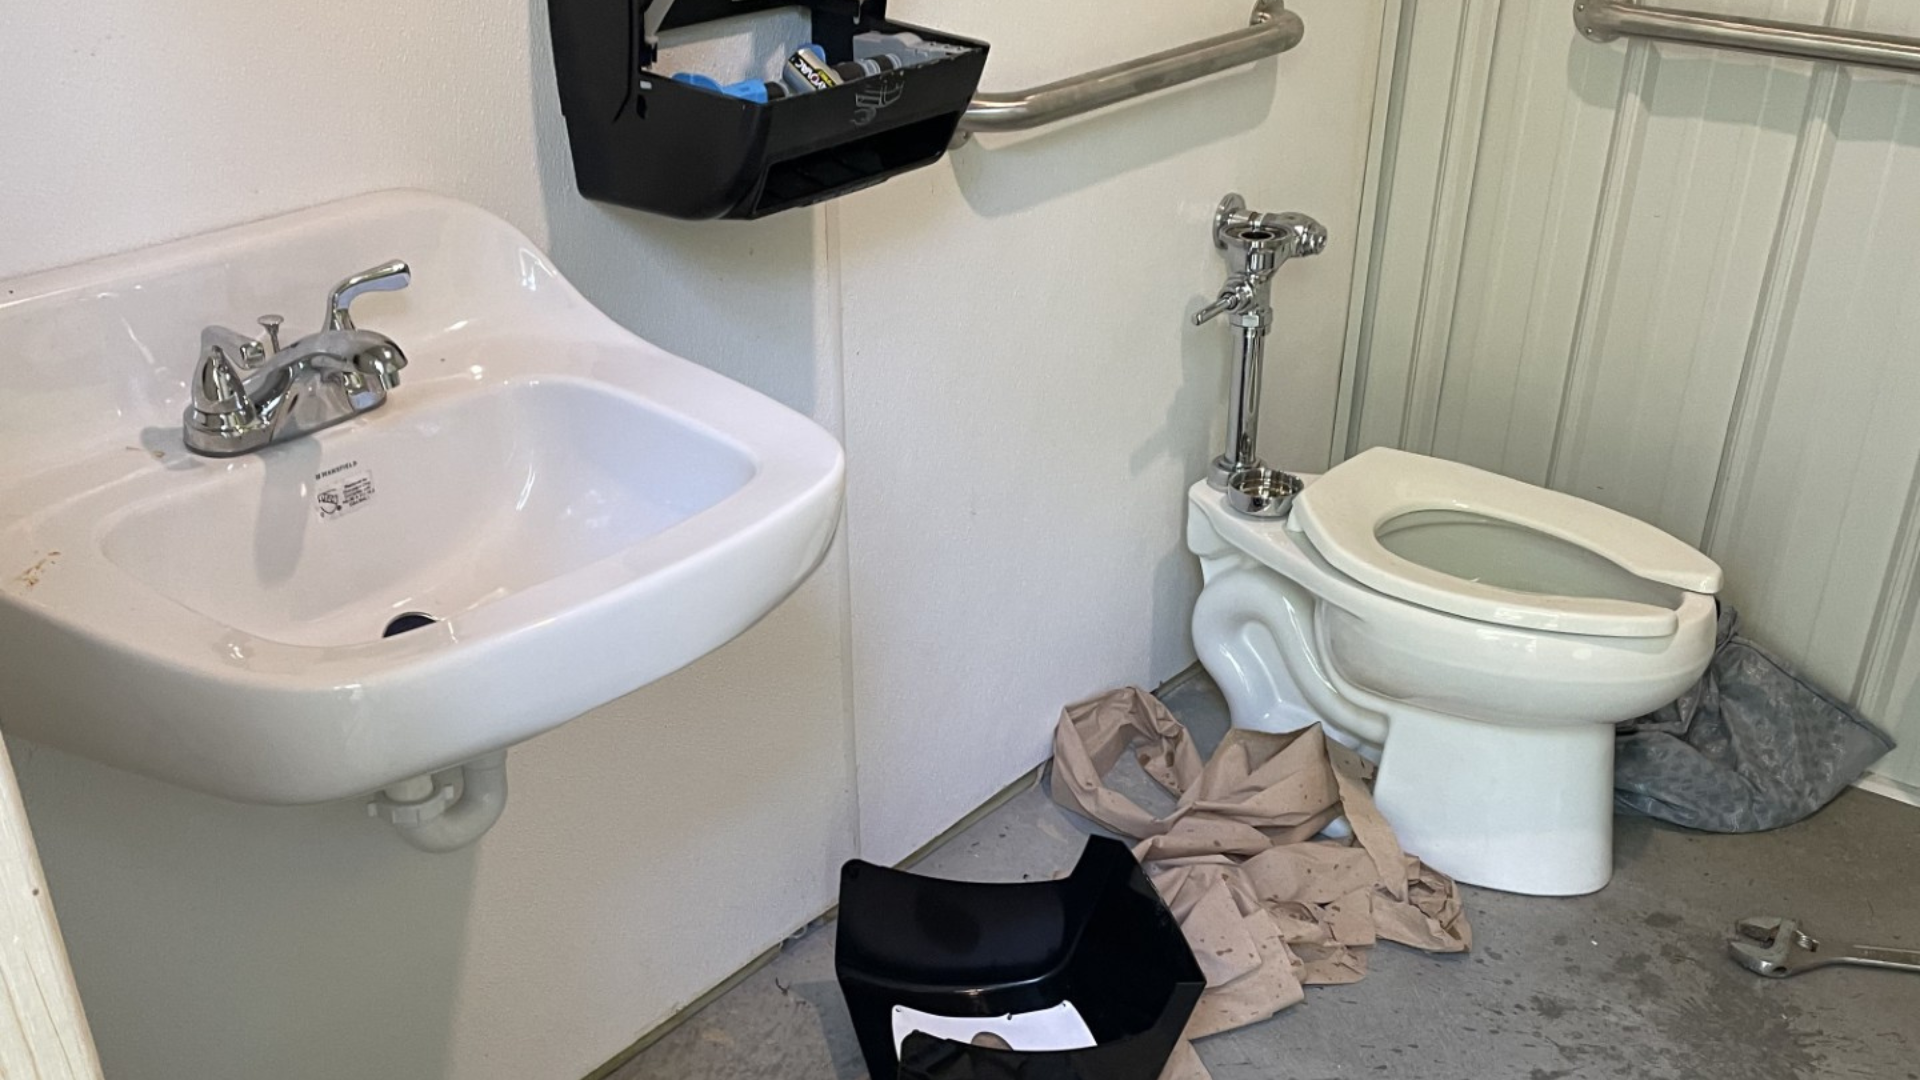 Bathroom Vandalism Under Investigation